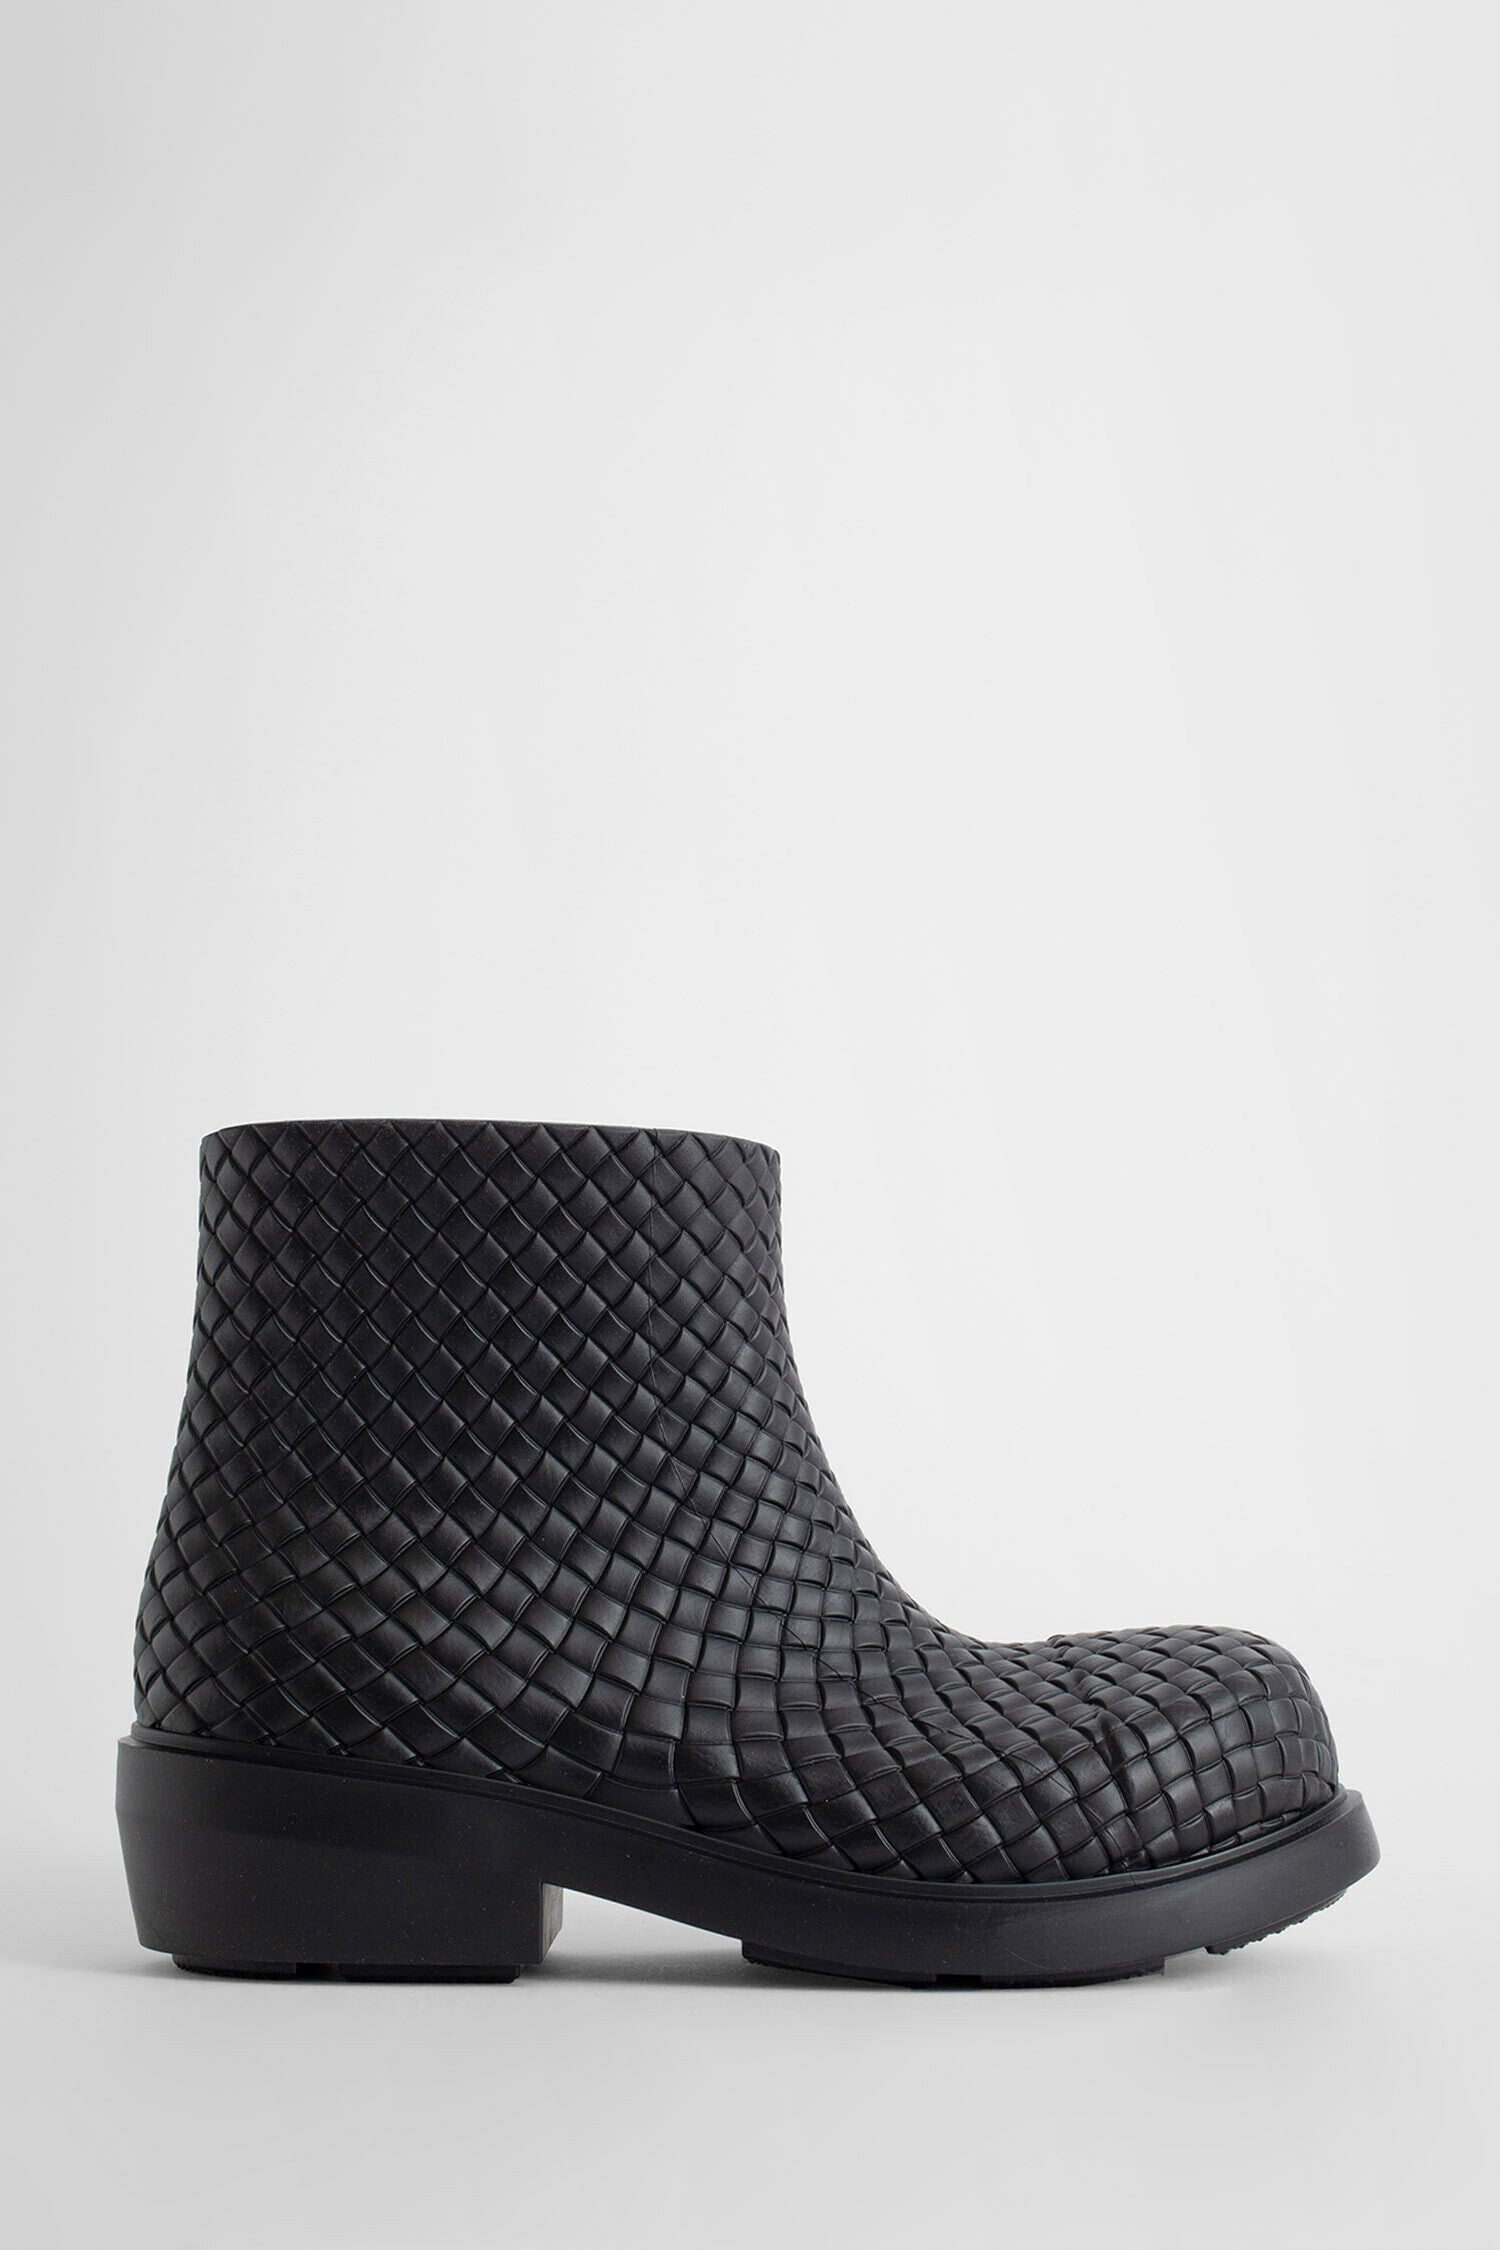 Louis Vuitton LV Record Chelsea Boot BLACK. Size 38.5